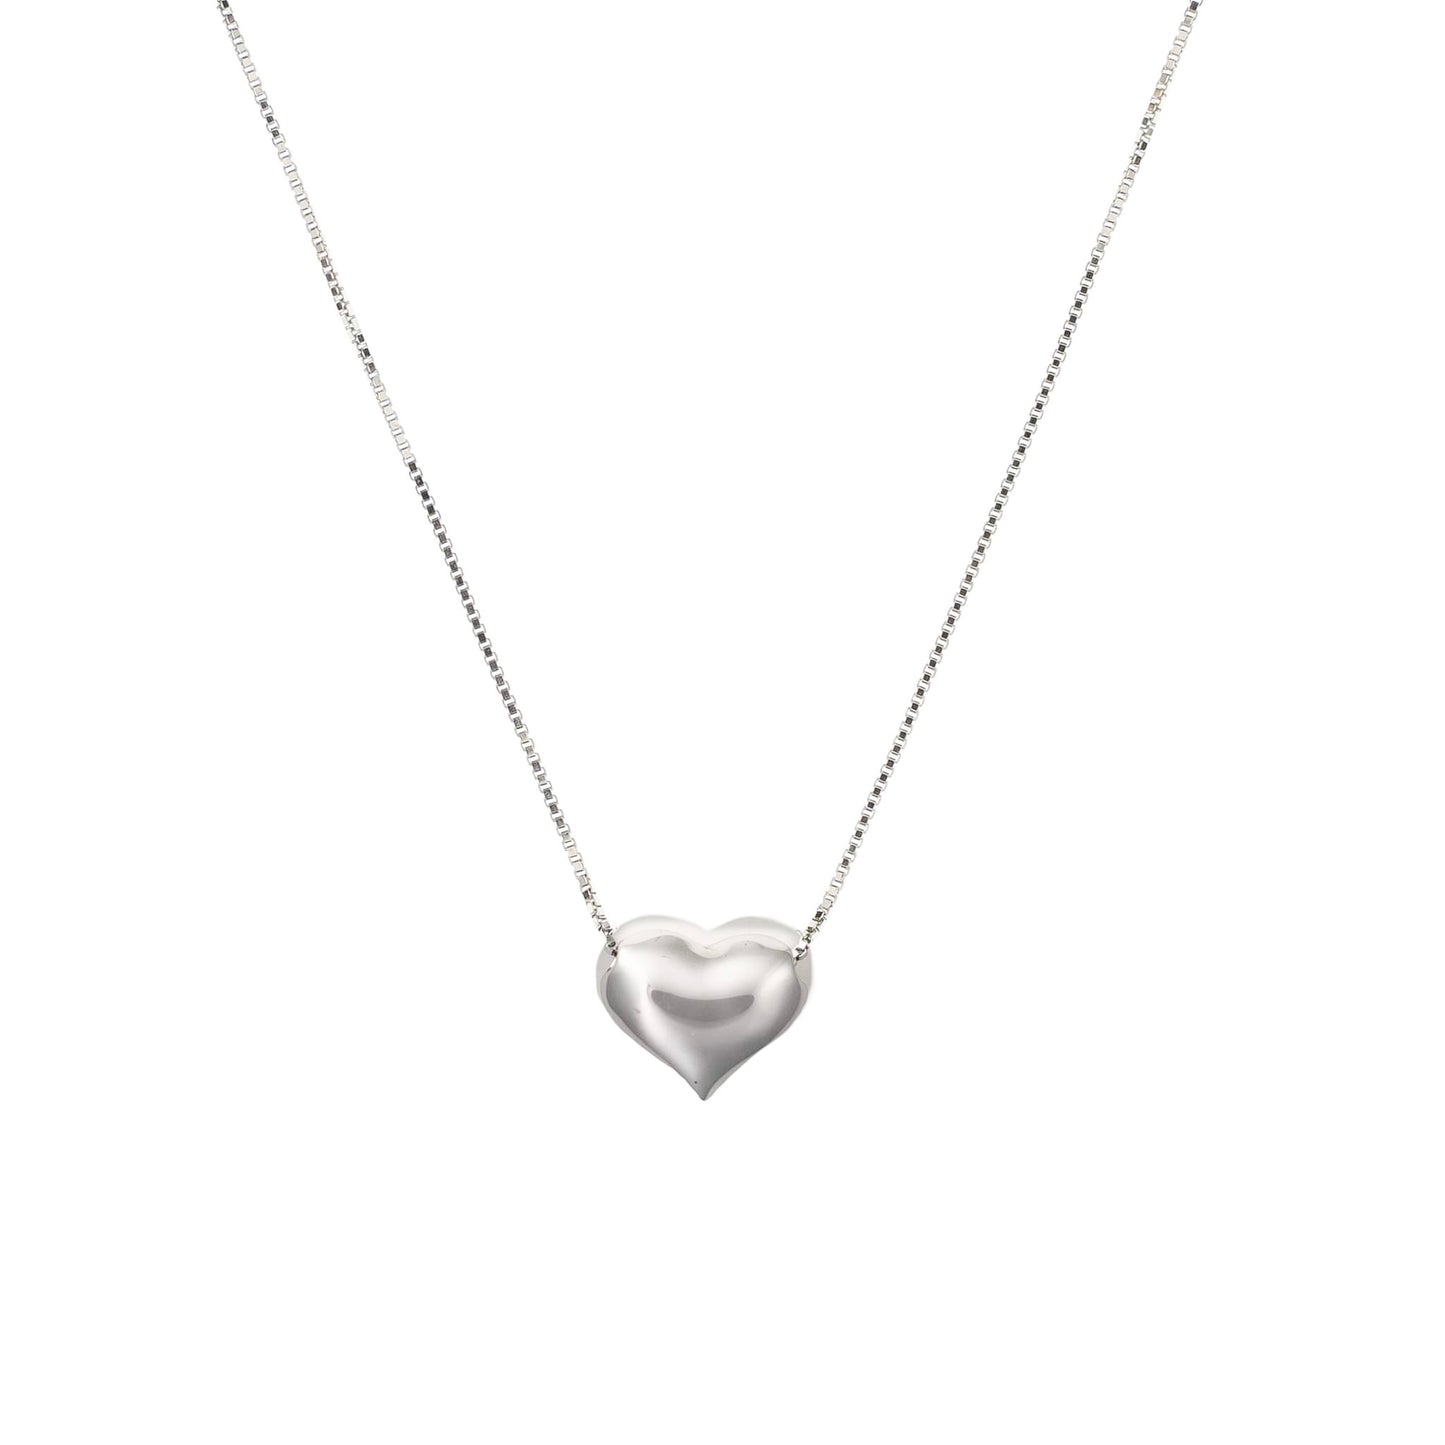 Sterling silver necklace "Heart medium"